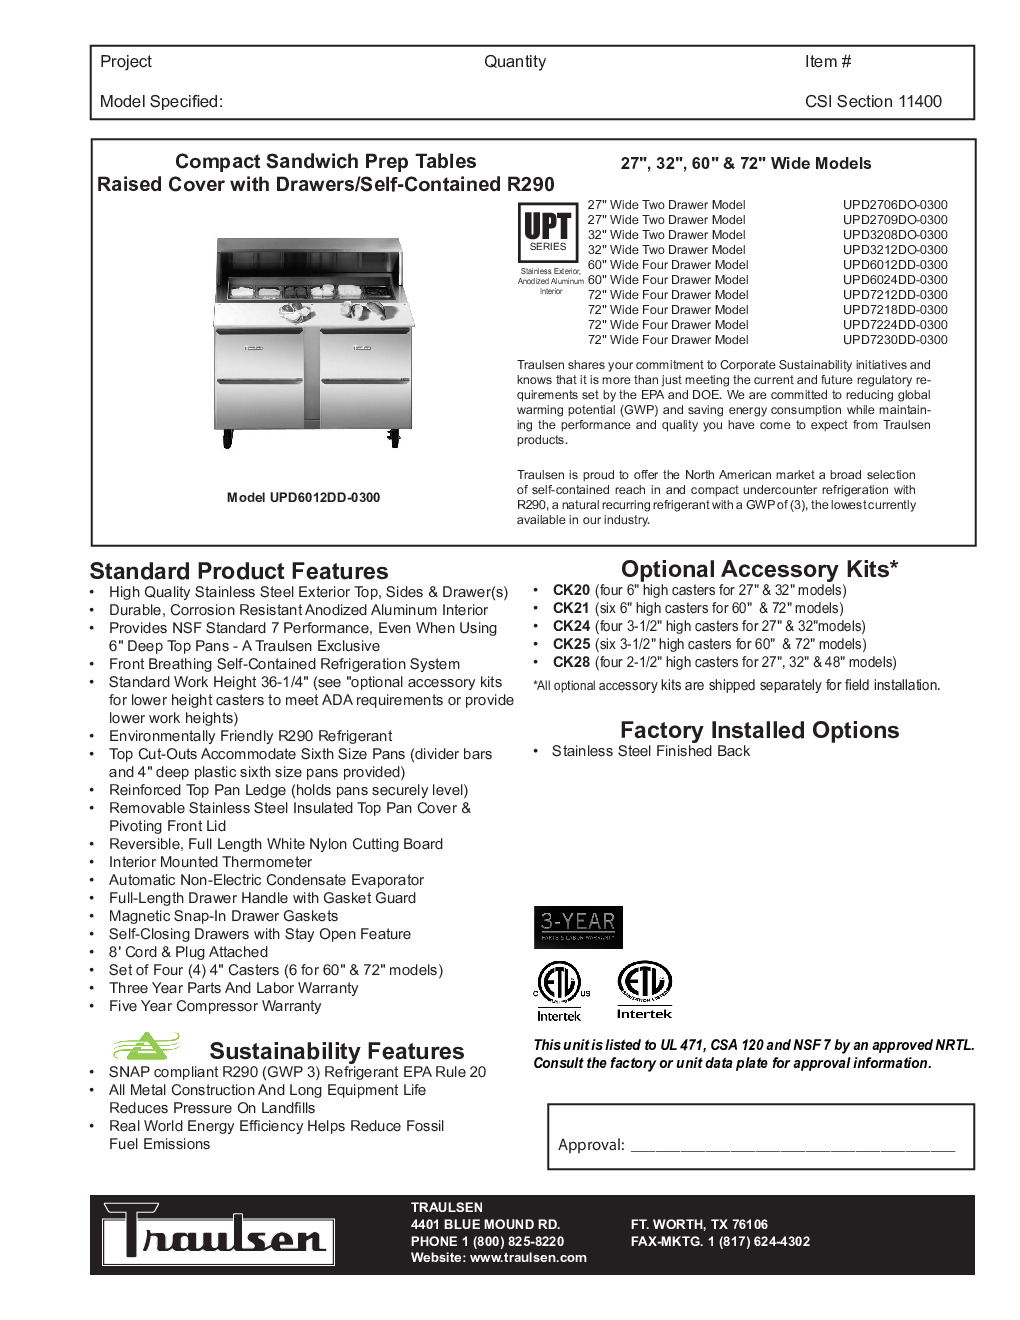 Traulsen UPD7230DD-0300-SB Sandwich / Salad Unit Refrigerated Counter